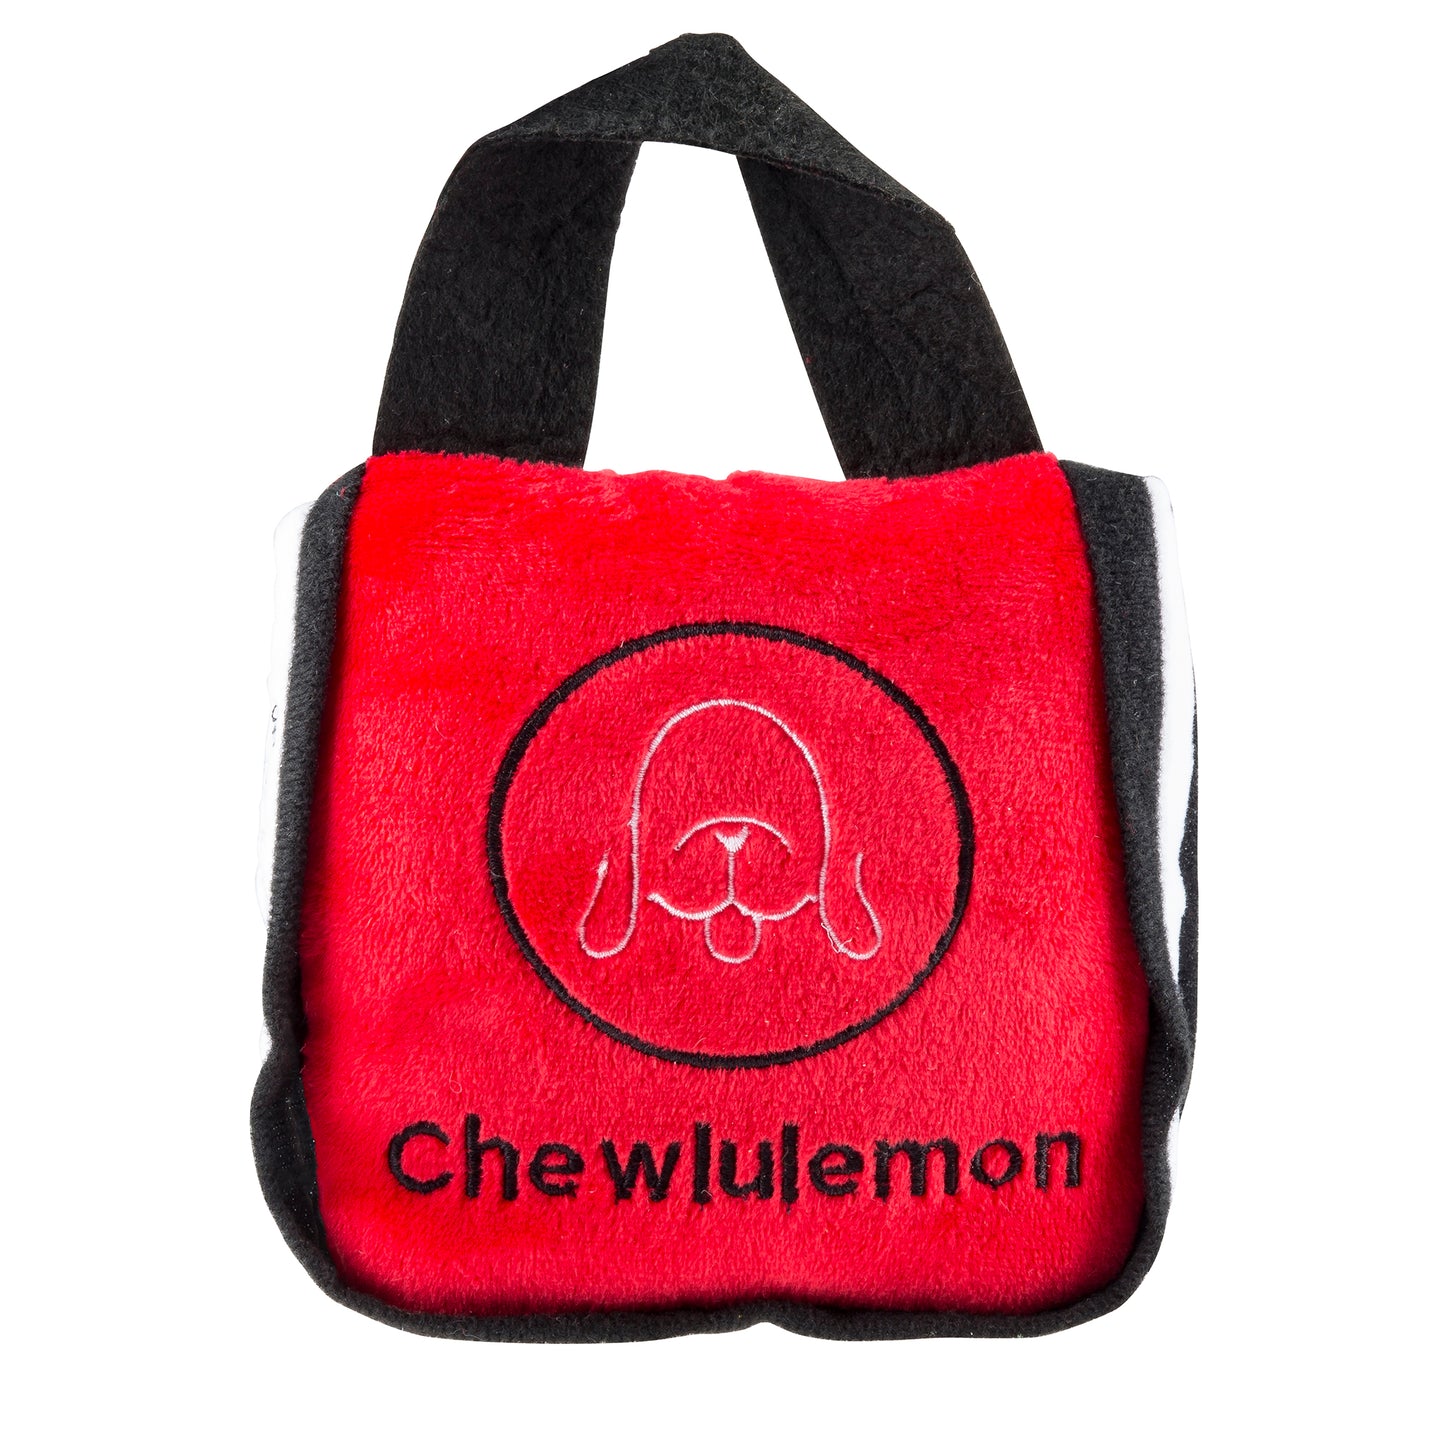 Chewlulemon Bag, Dog Chew Toy